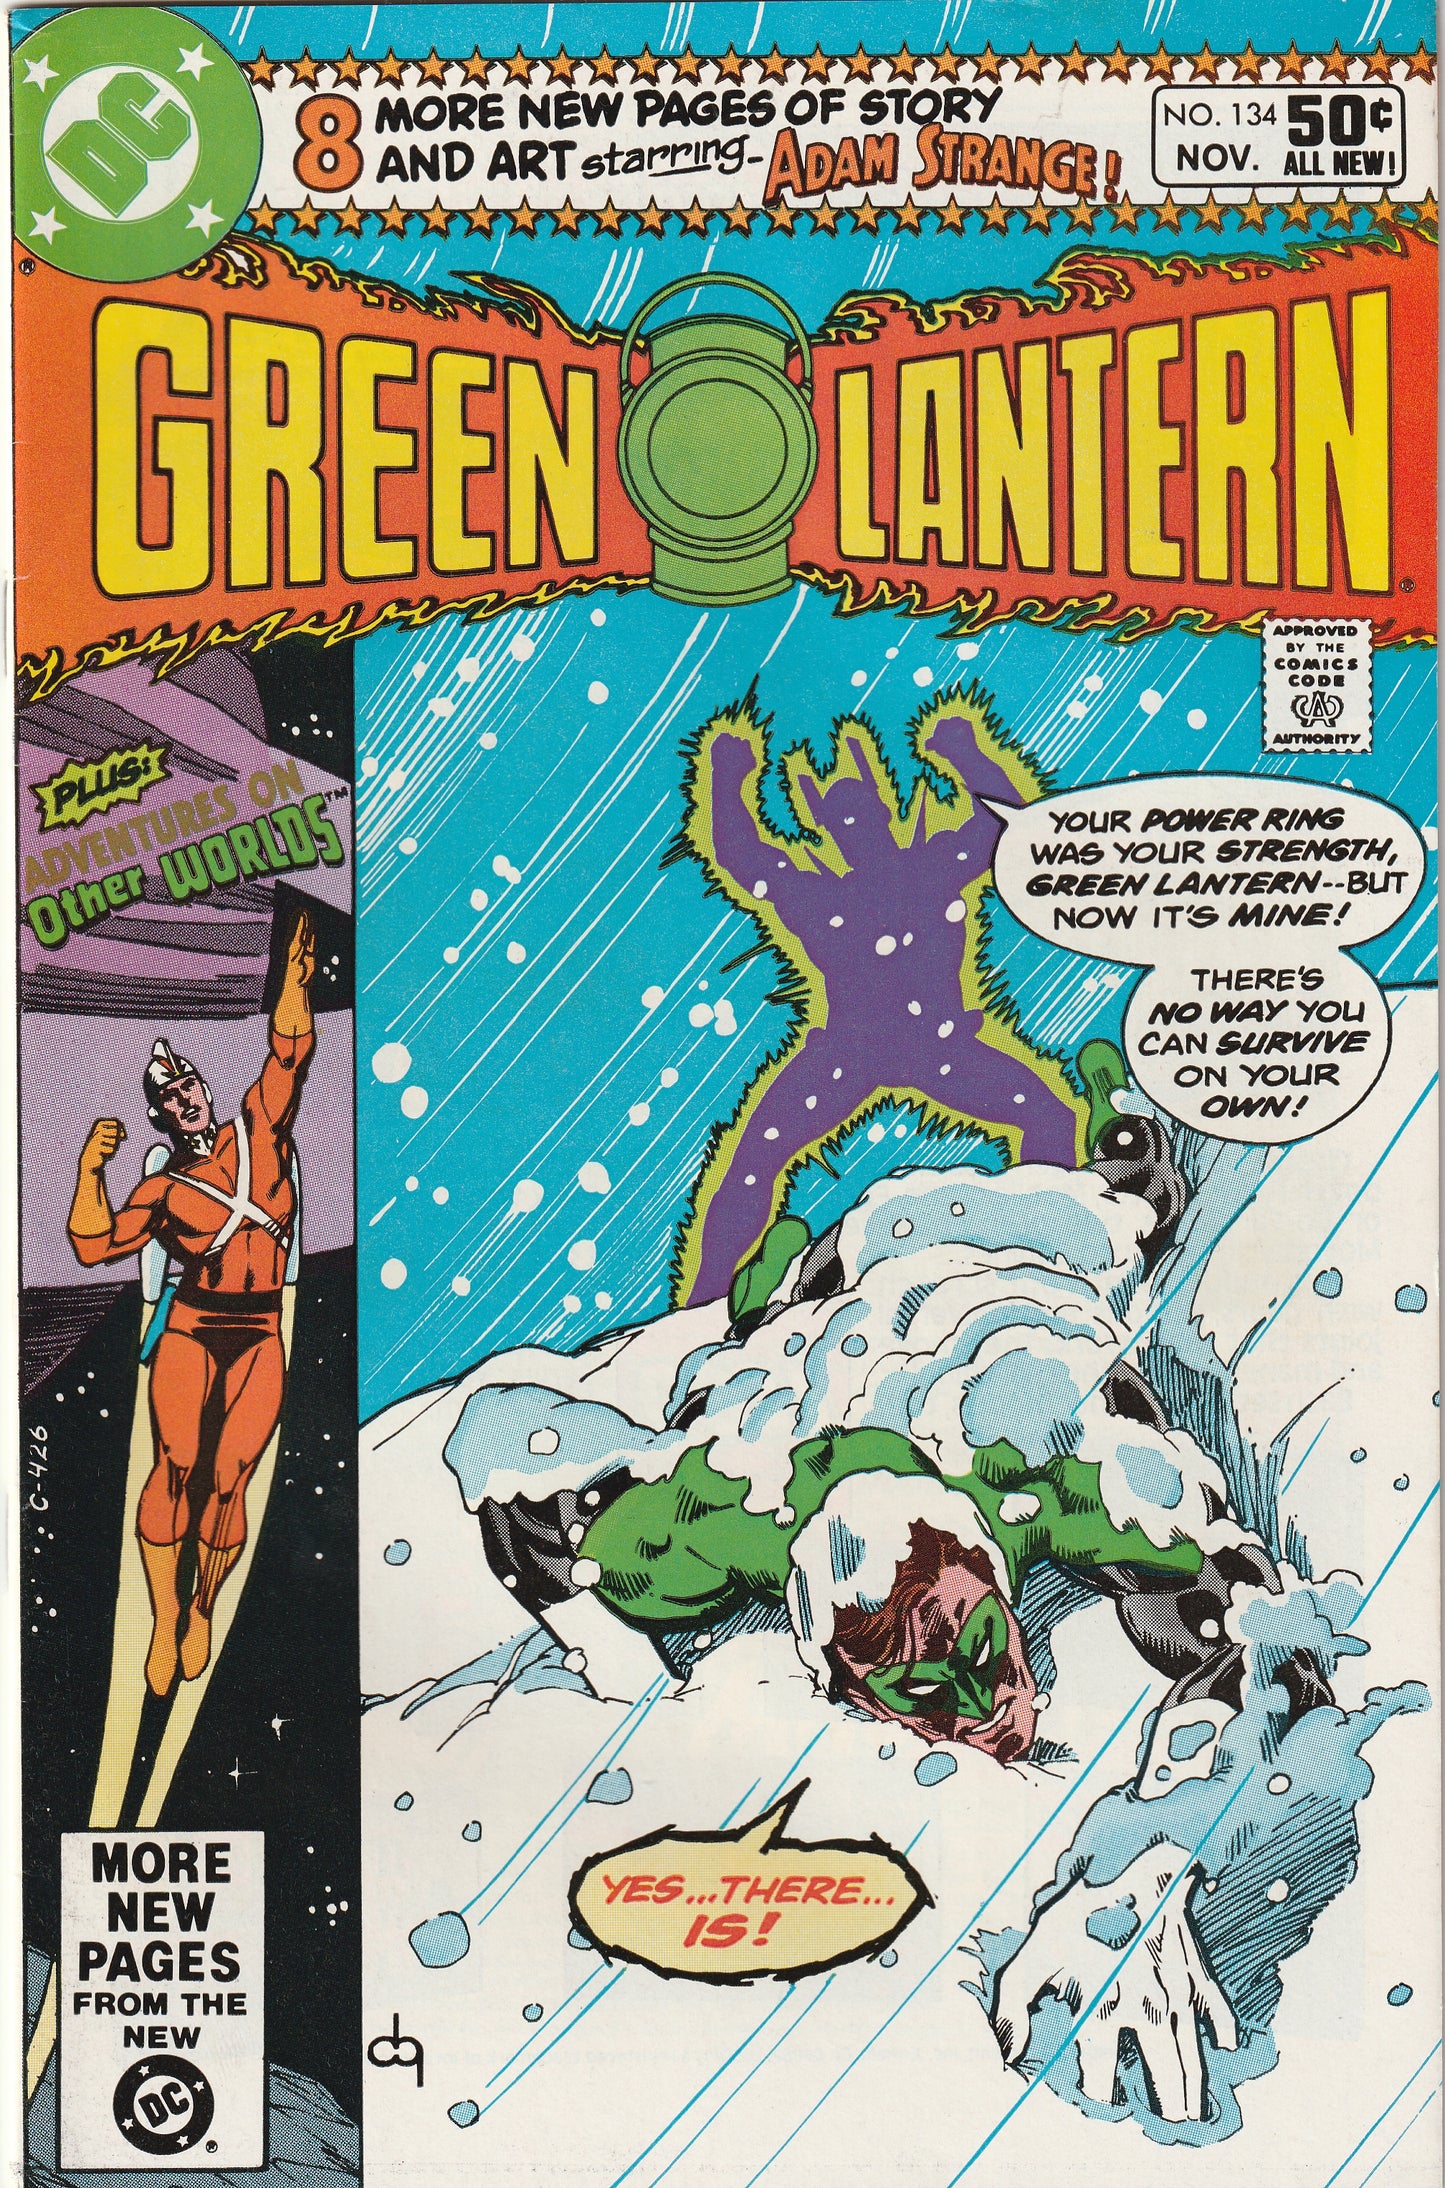 Green Lantern #134 (1980) - Tales of the Green Lantern Corps & Adam Strange